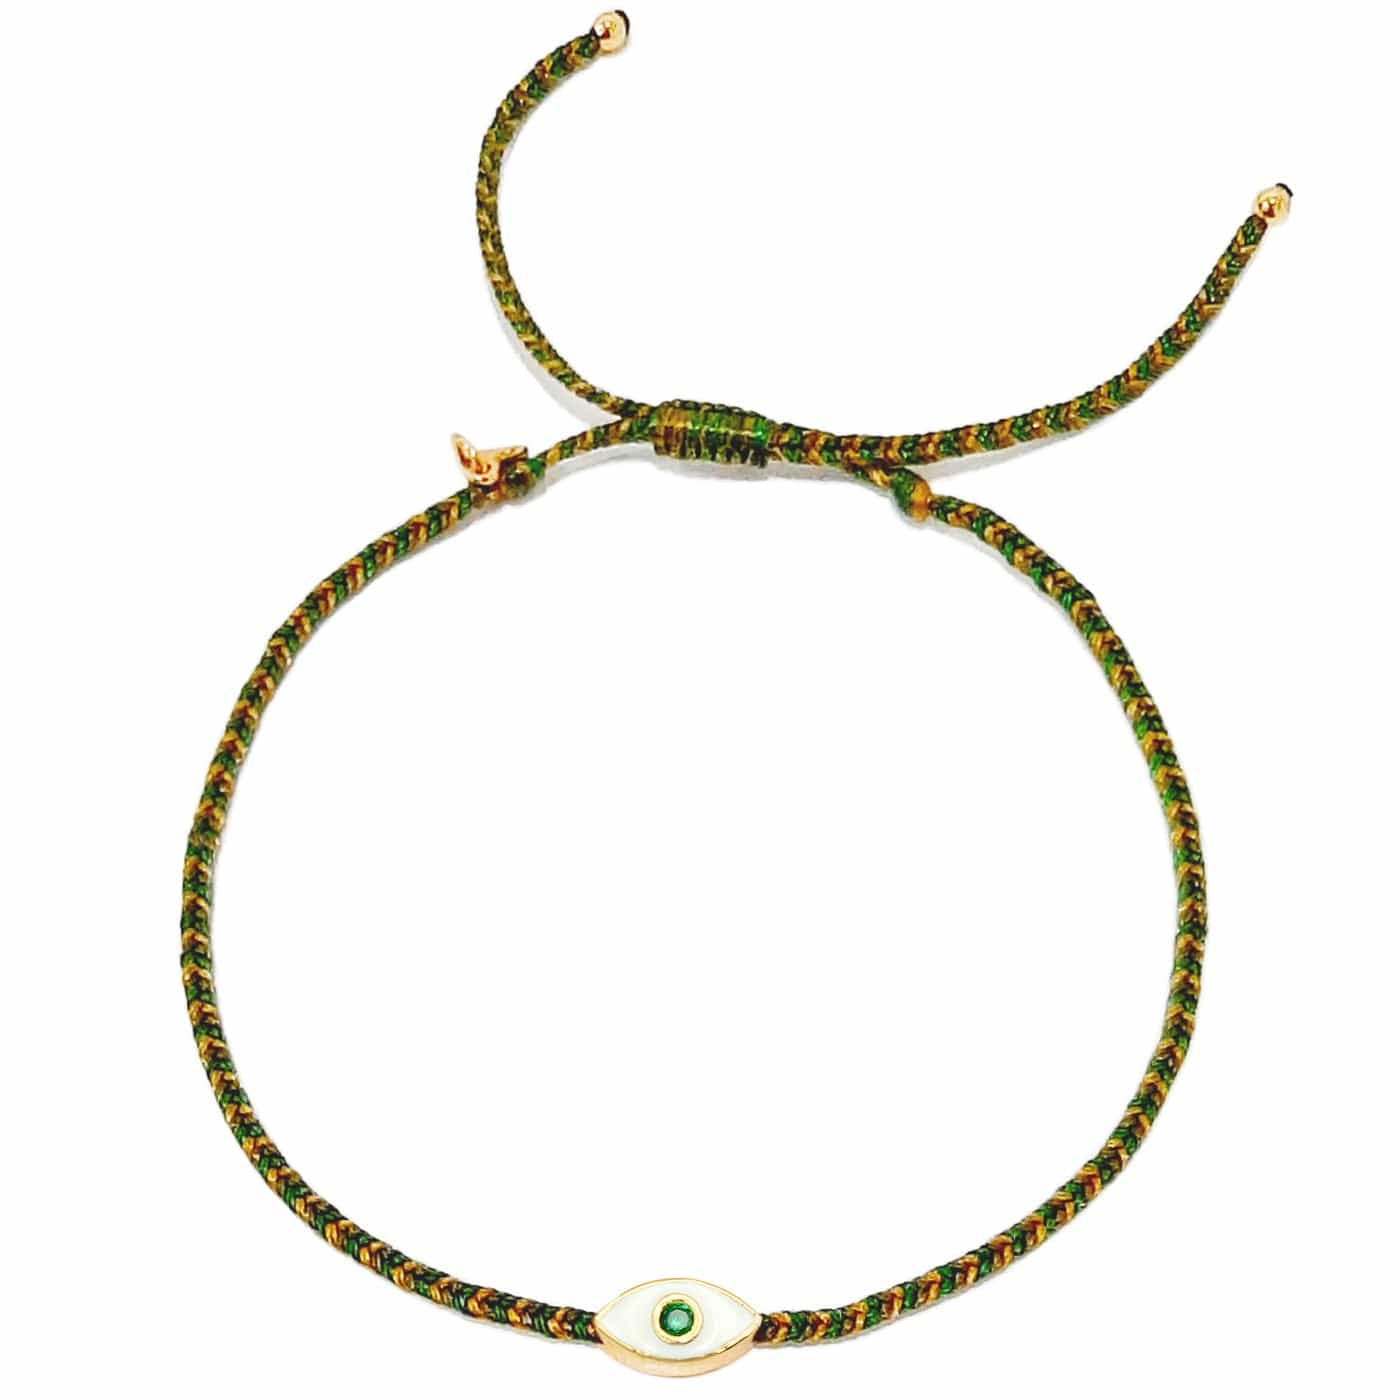 TAI JEWELRY Bracelet Eye Handmade Woven Bracelet With Enamel Charm